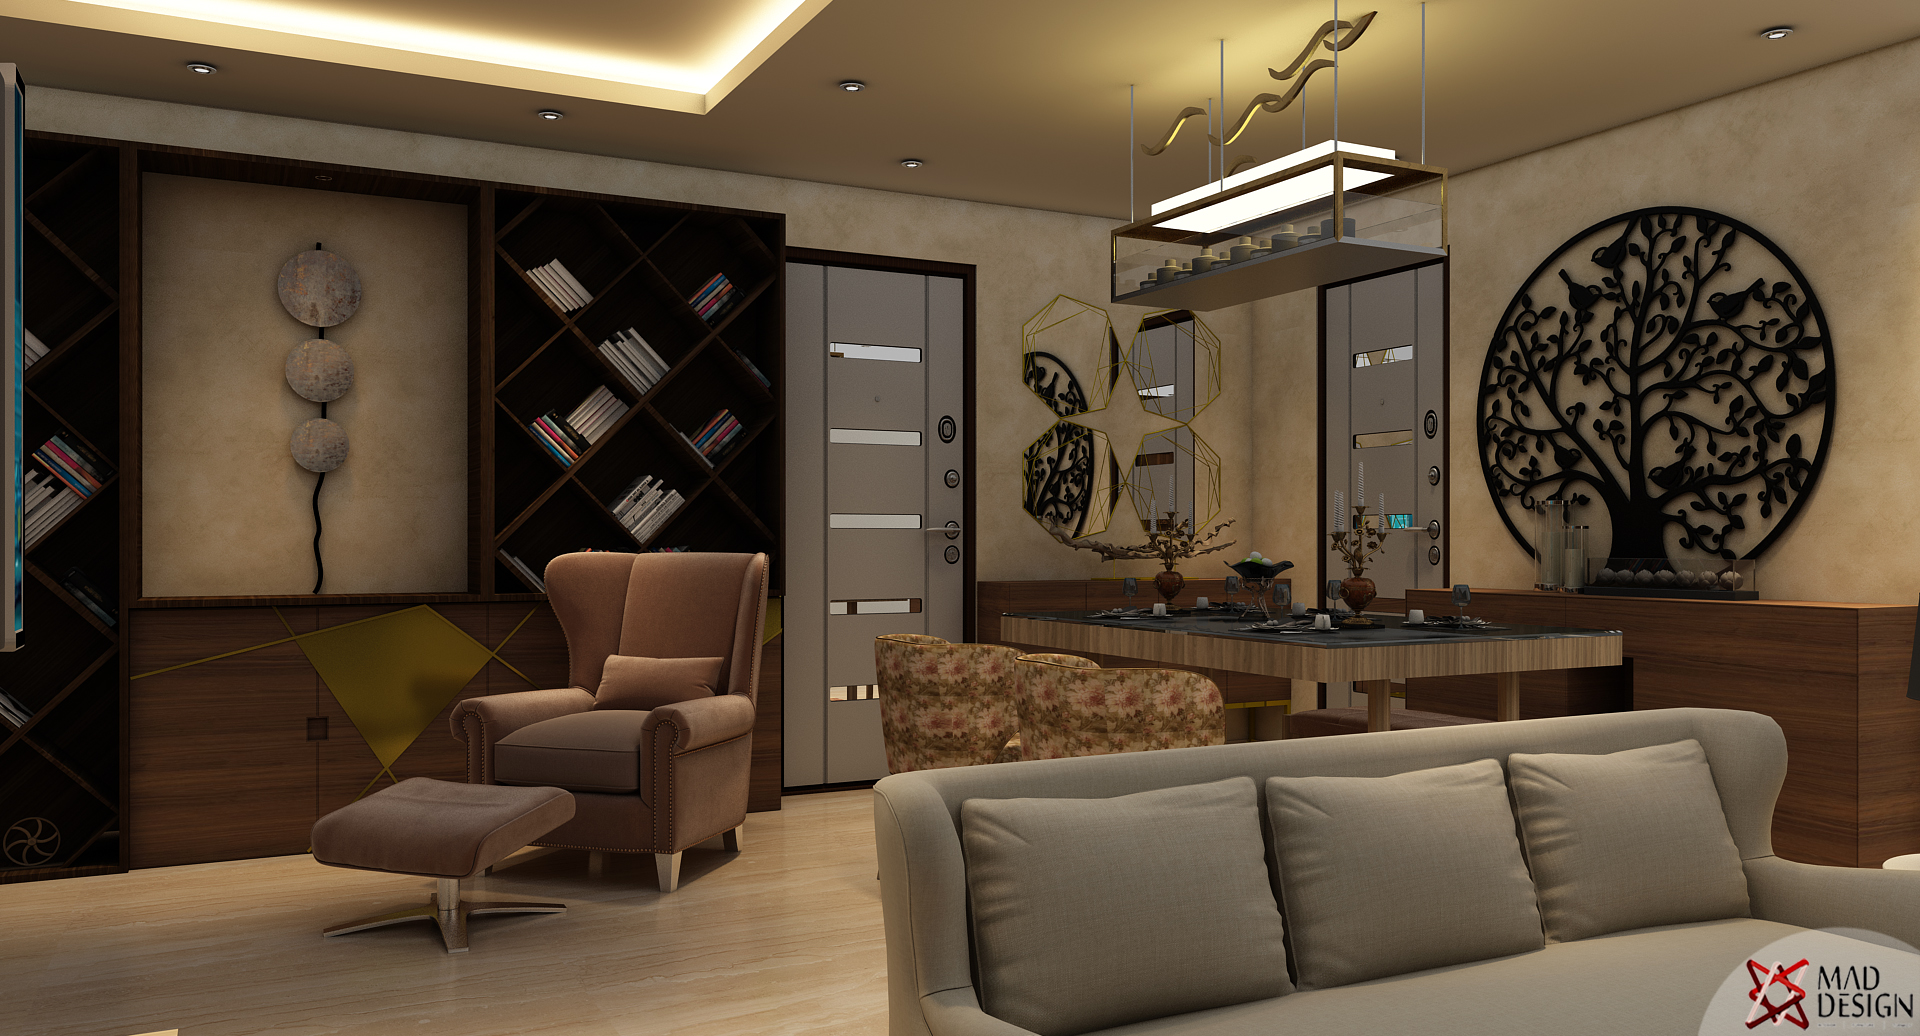 Living Room Design with Wallpaper - MAD Design